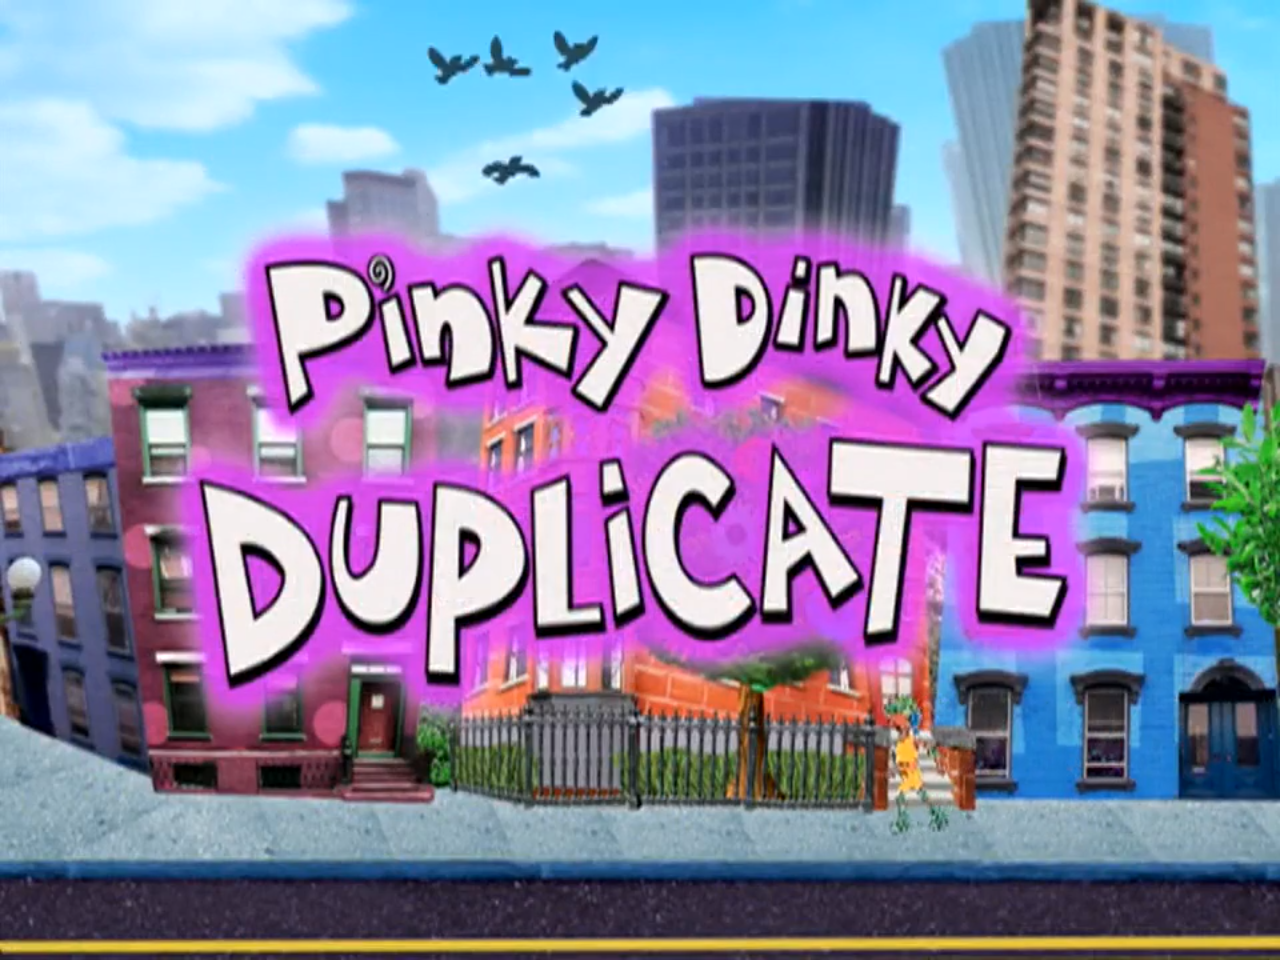 pinky dinky doo game time